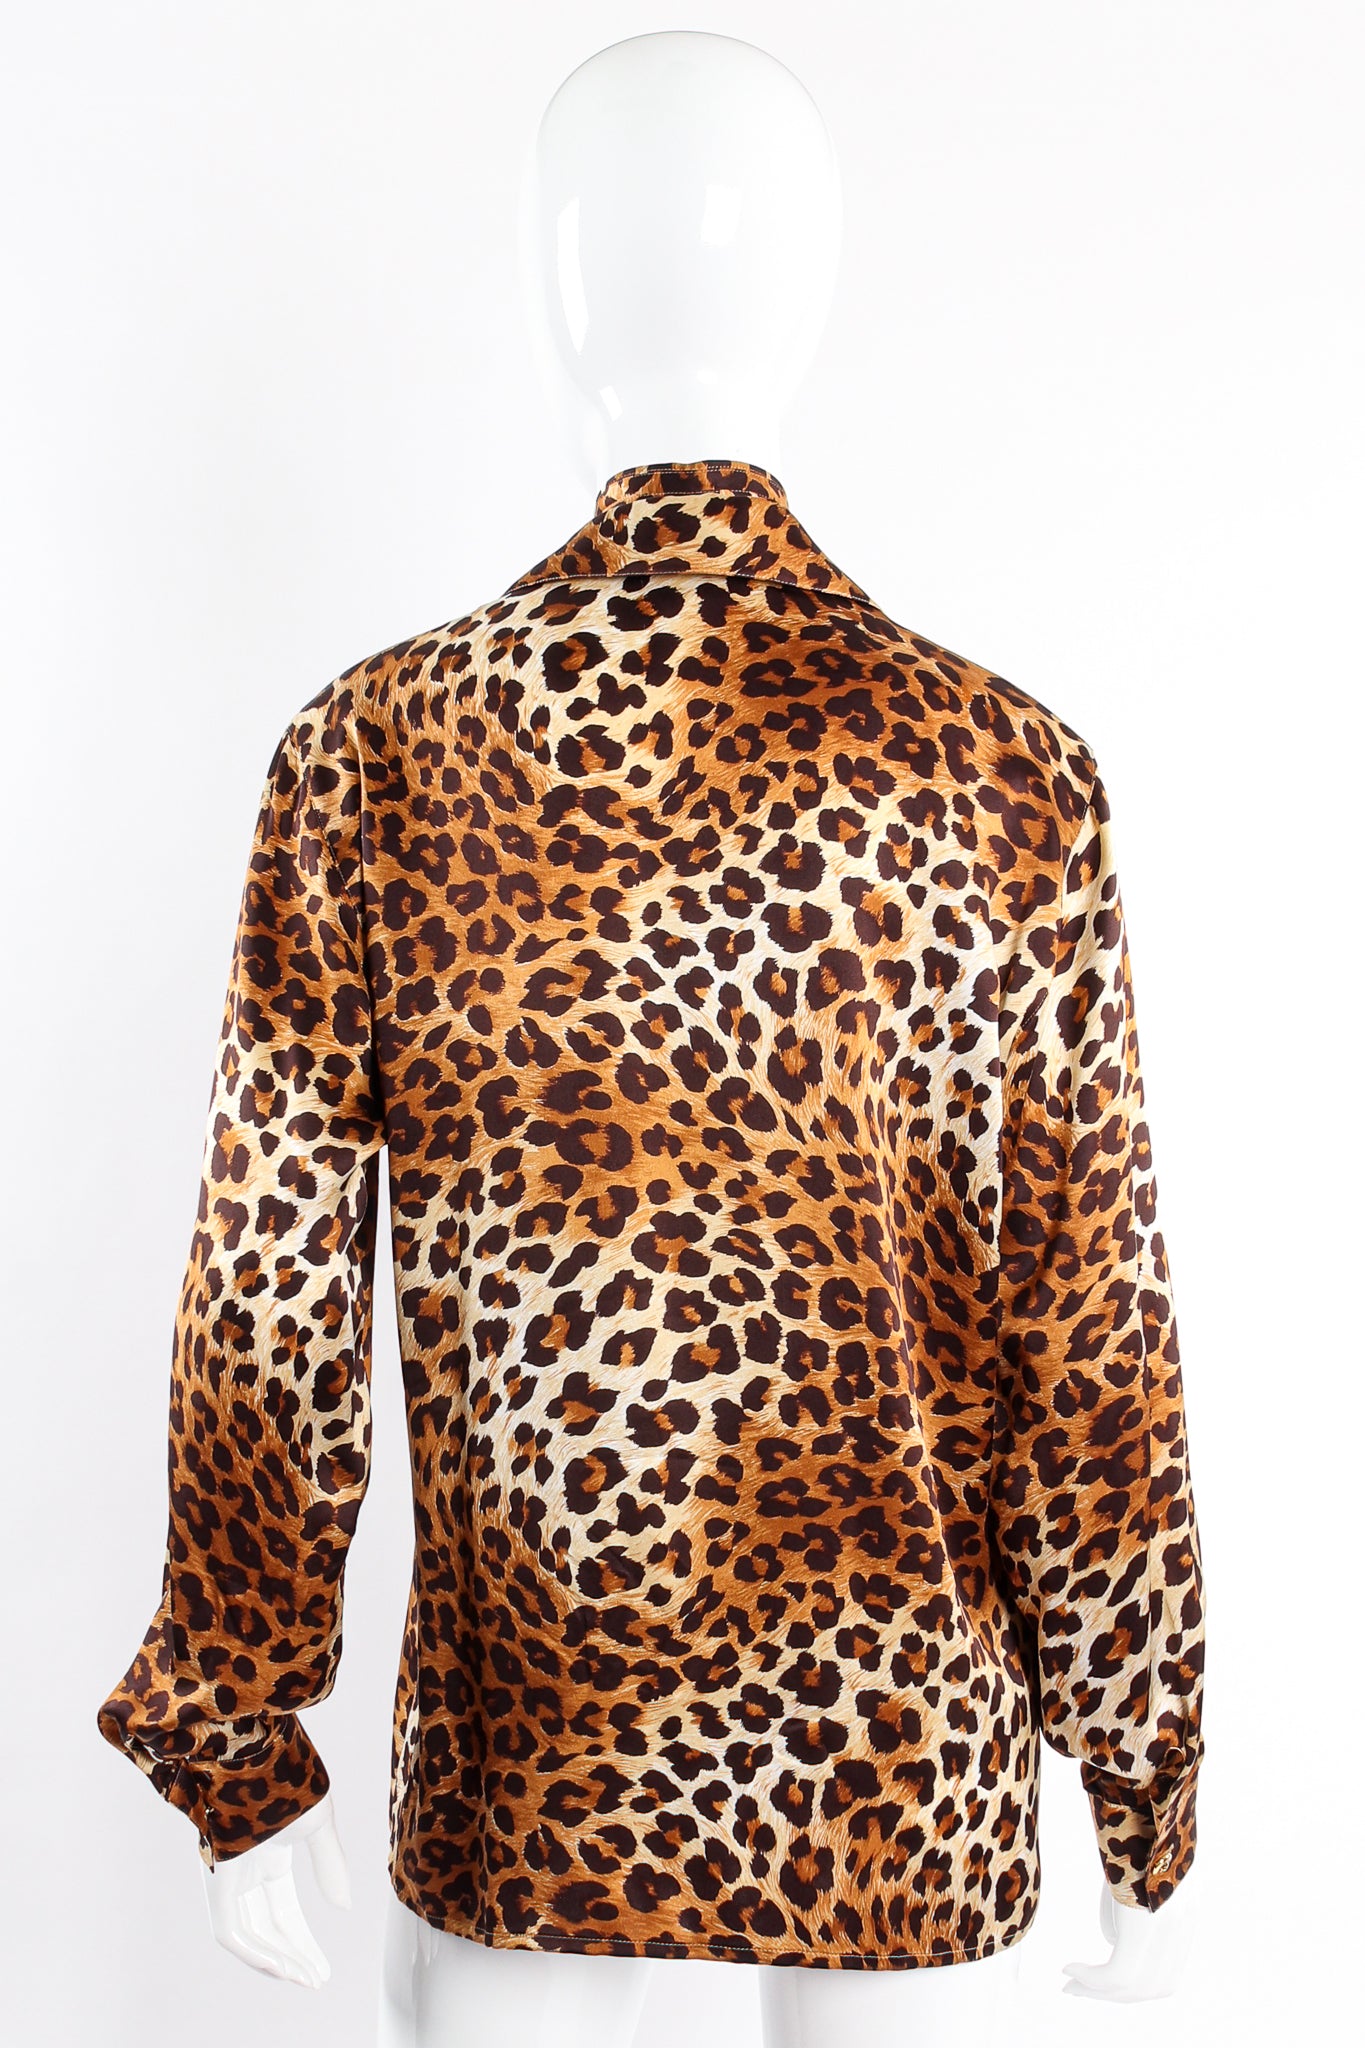 Leopard Print Shirt & Scarf